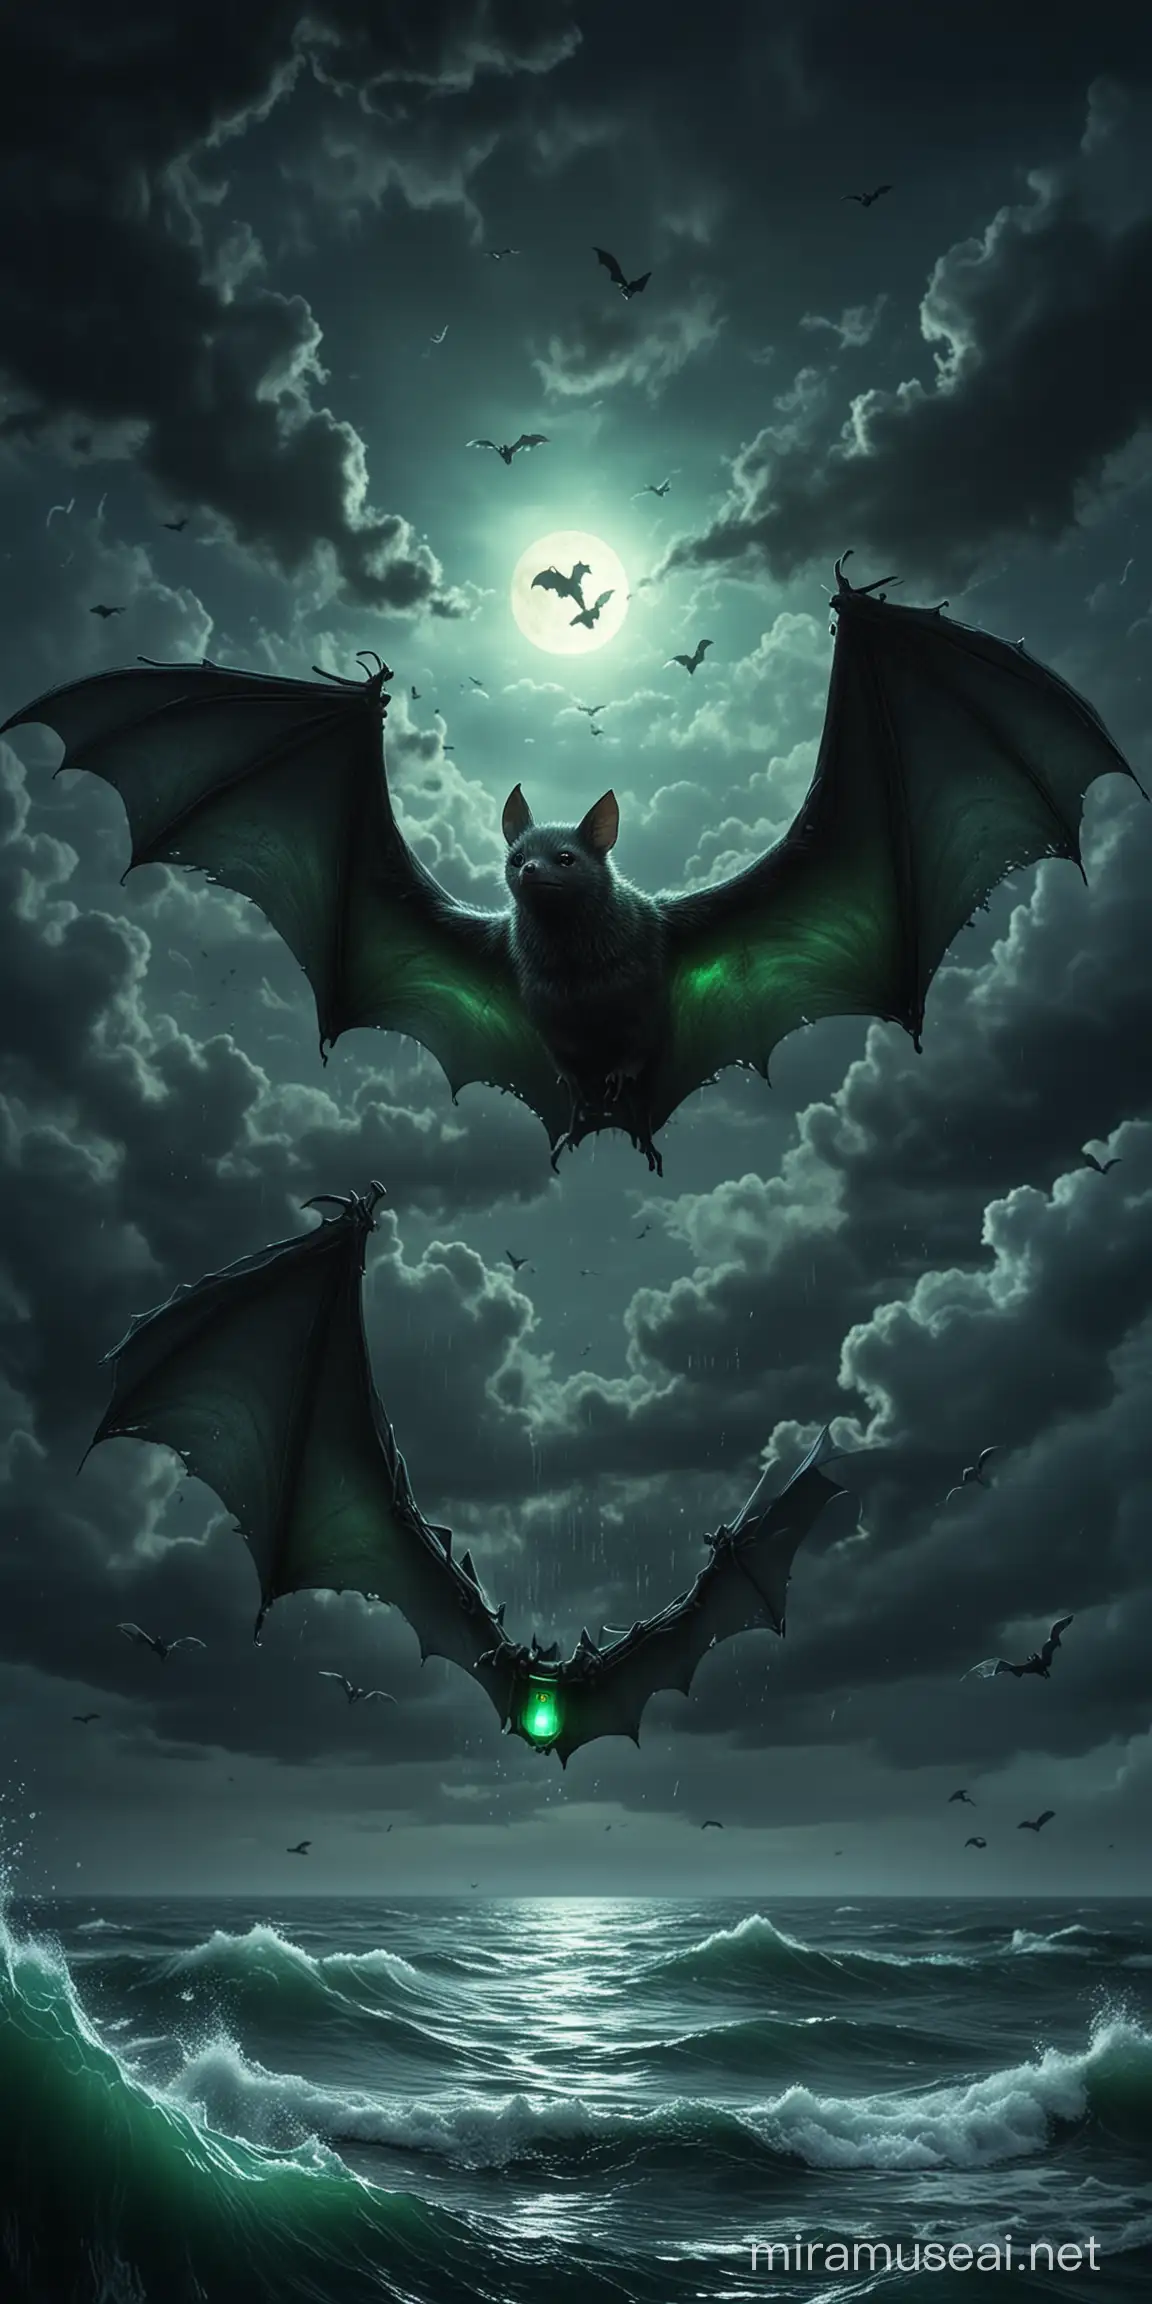 Mystical Bat Holding Glowing Token Over Dark Stormy Sea